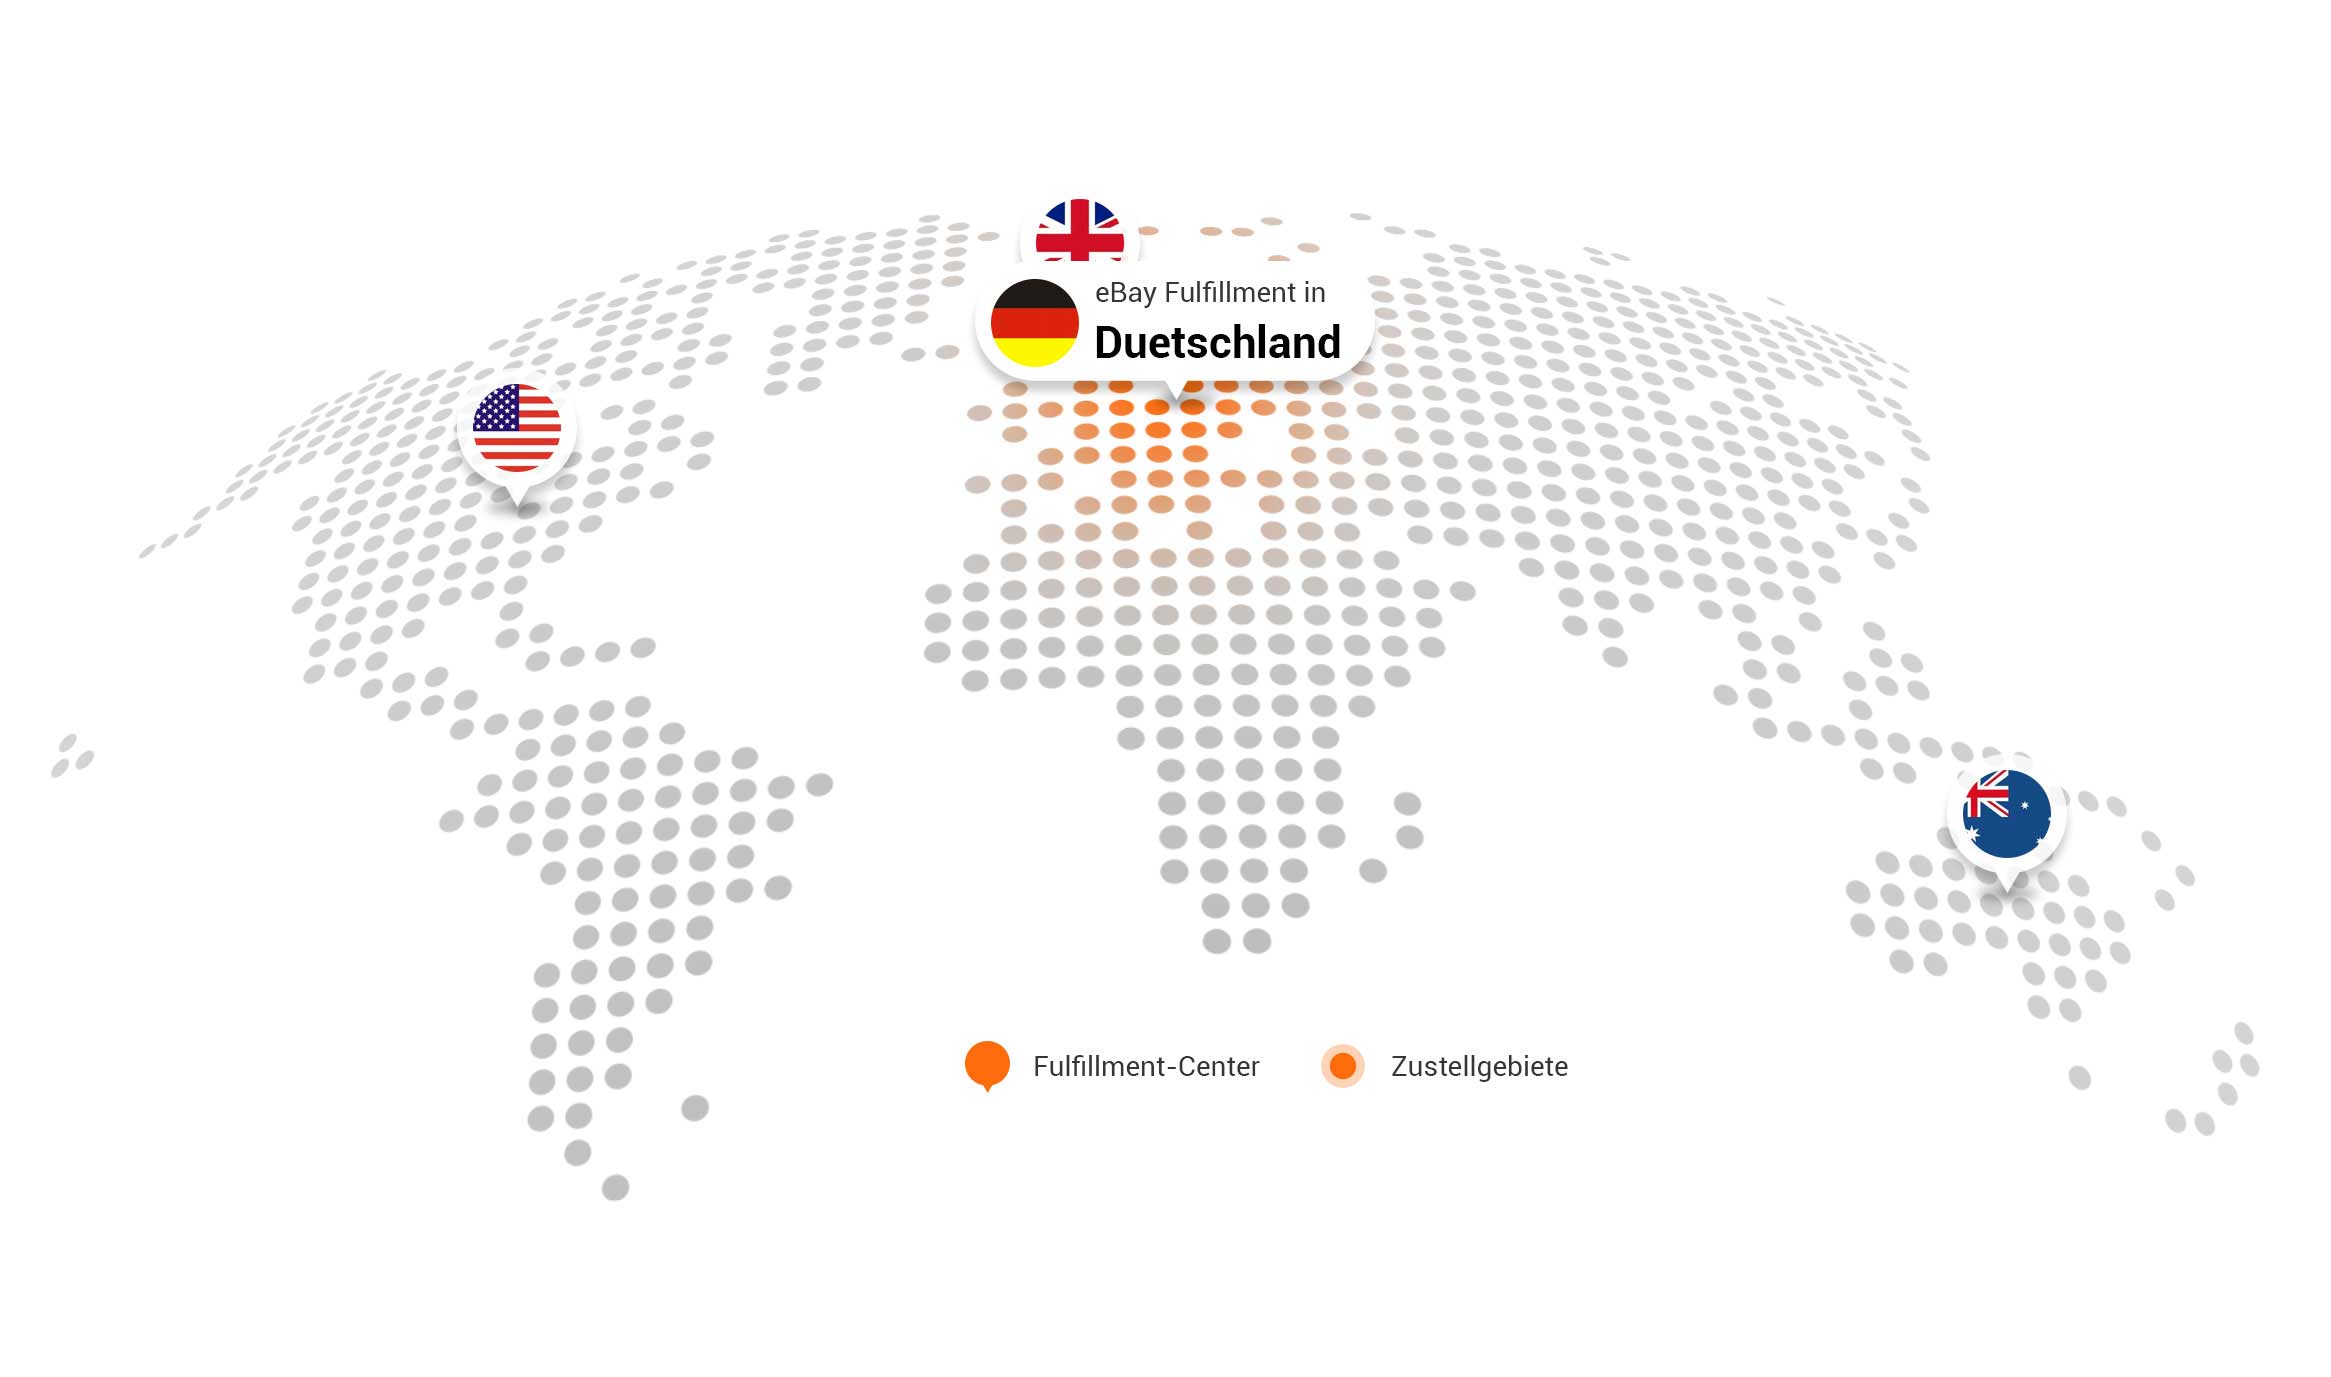 Orange Connex global network